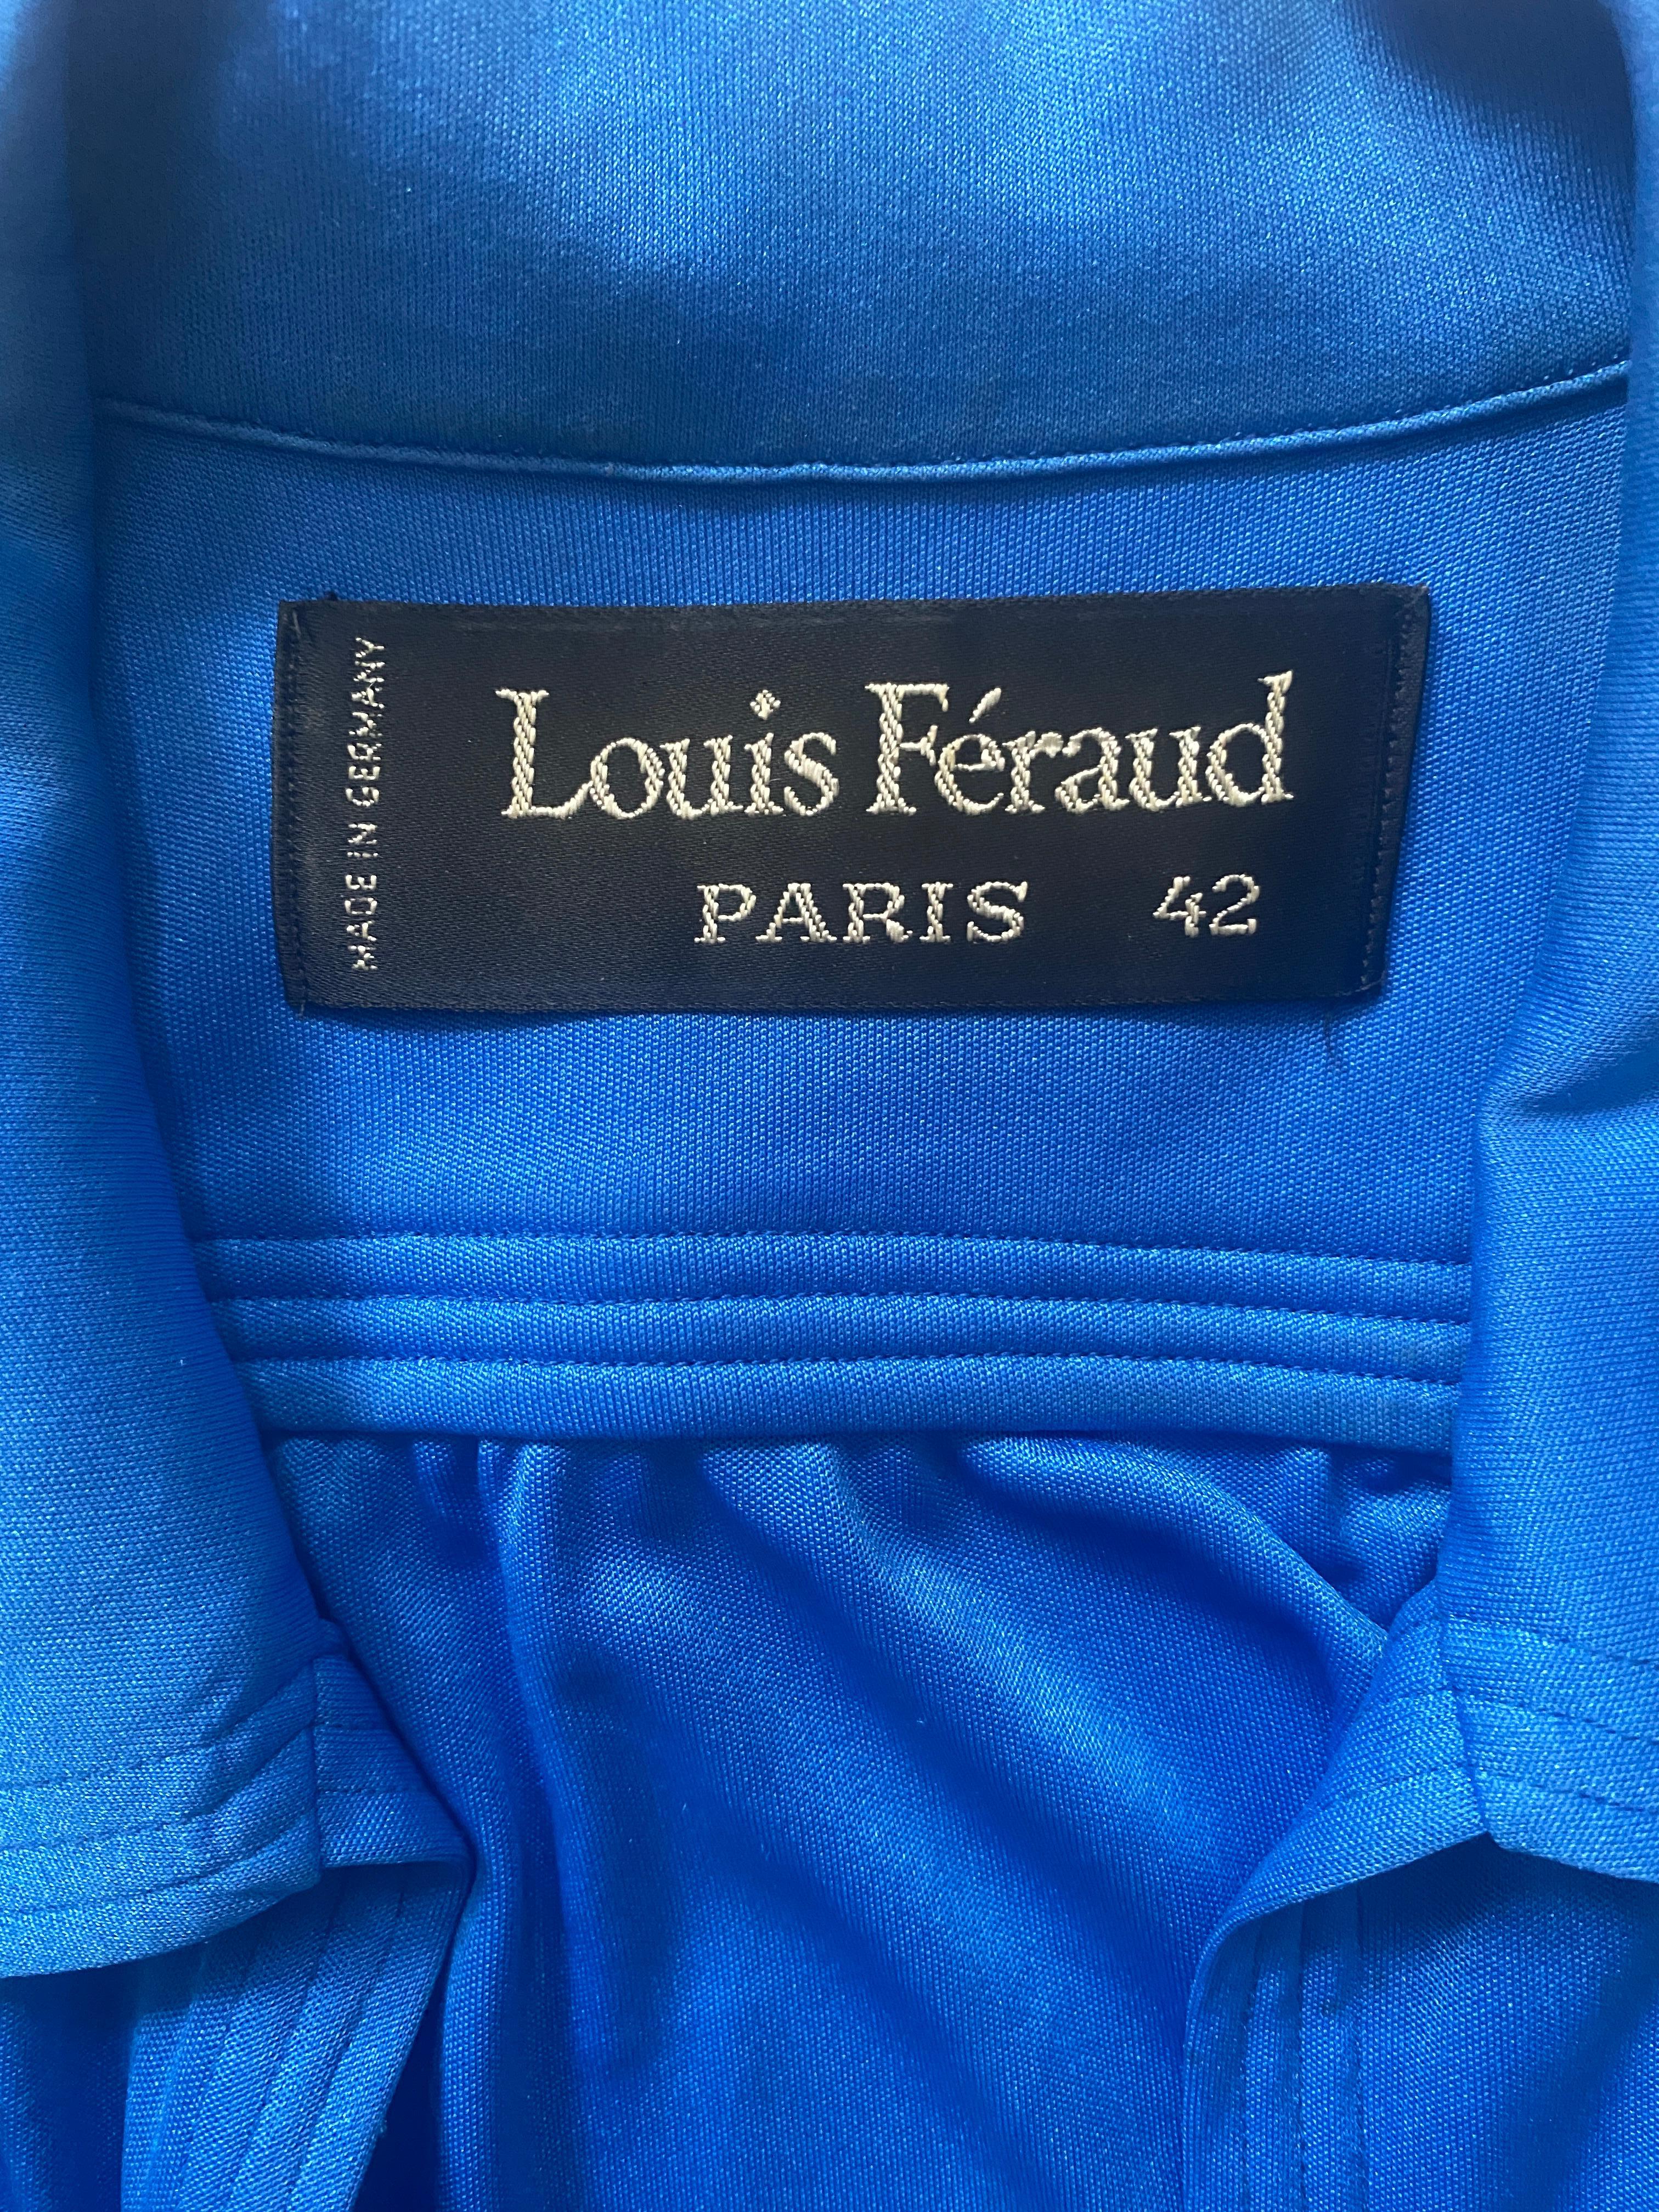 1970s Azure Blue Louis Feraud Jersey Dress with Jacket 5